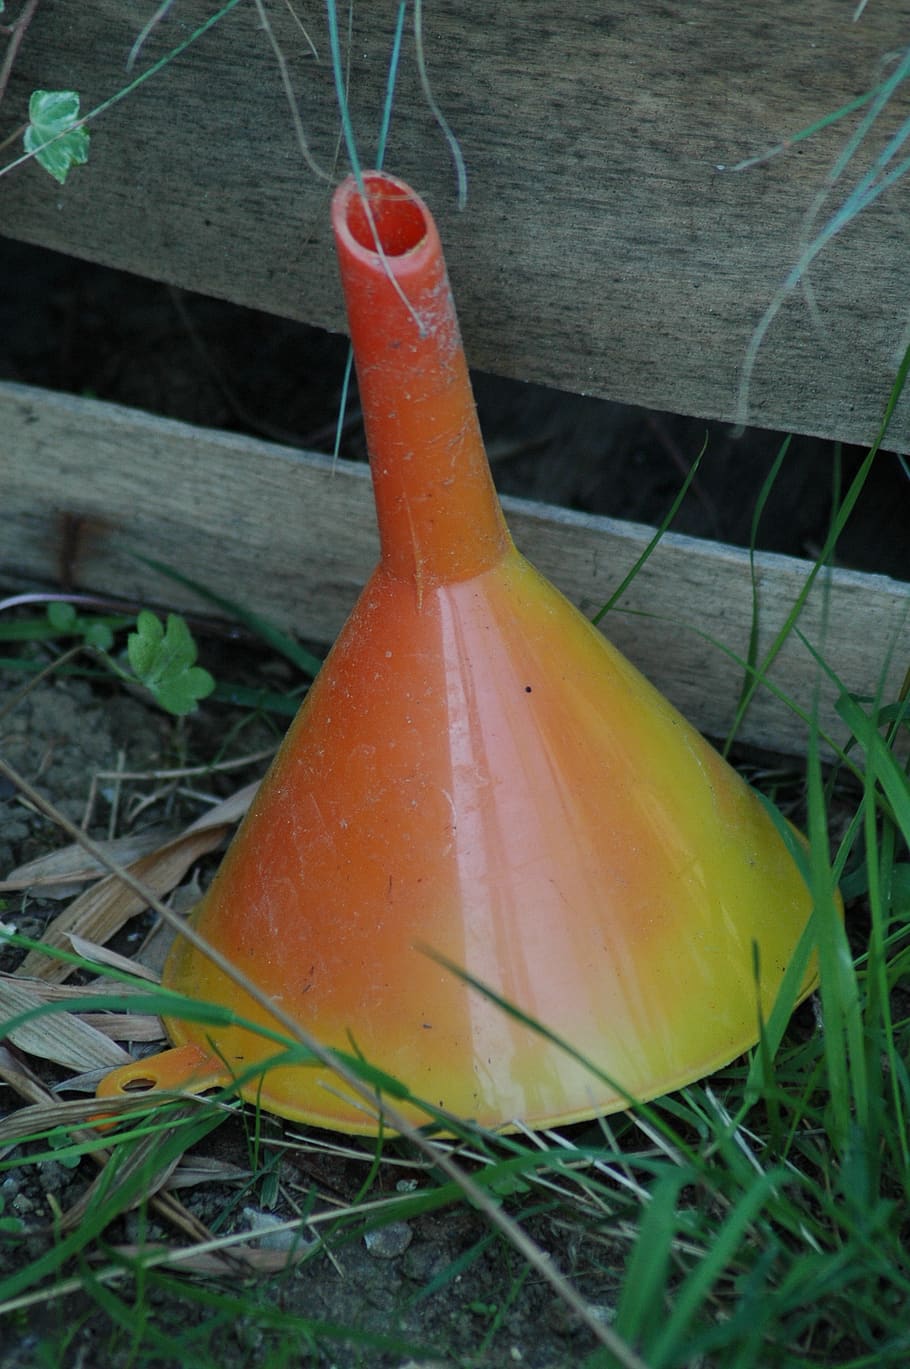 funnel, orange, yellow, light, tool, close-up, plant, orange color, nature, day